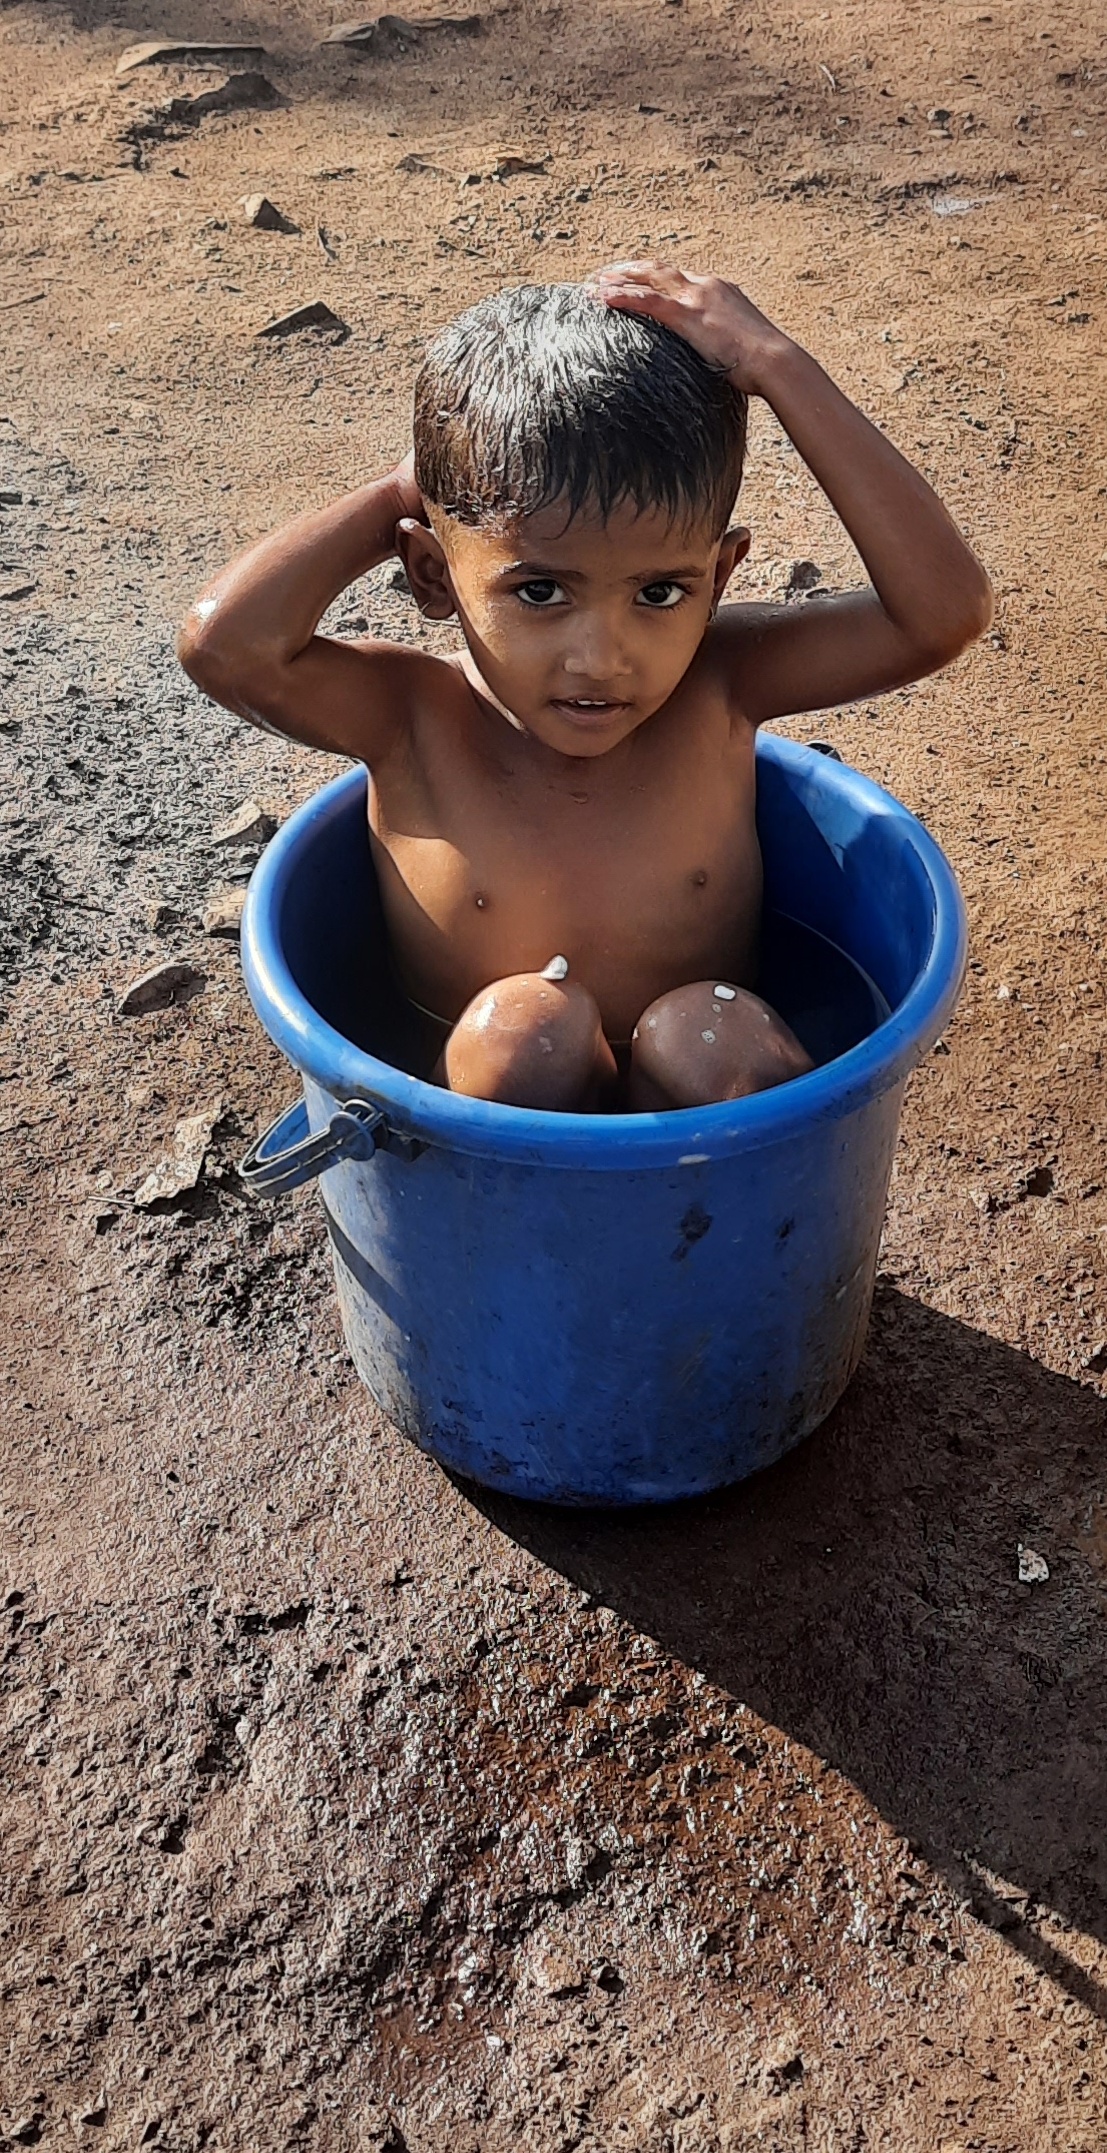 Kid bathing in the the bucket